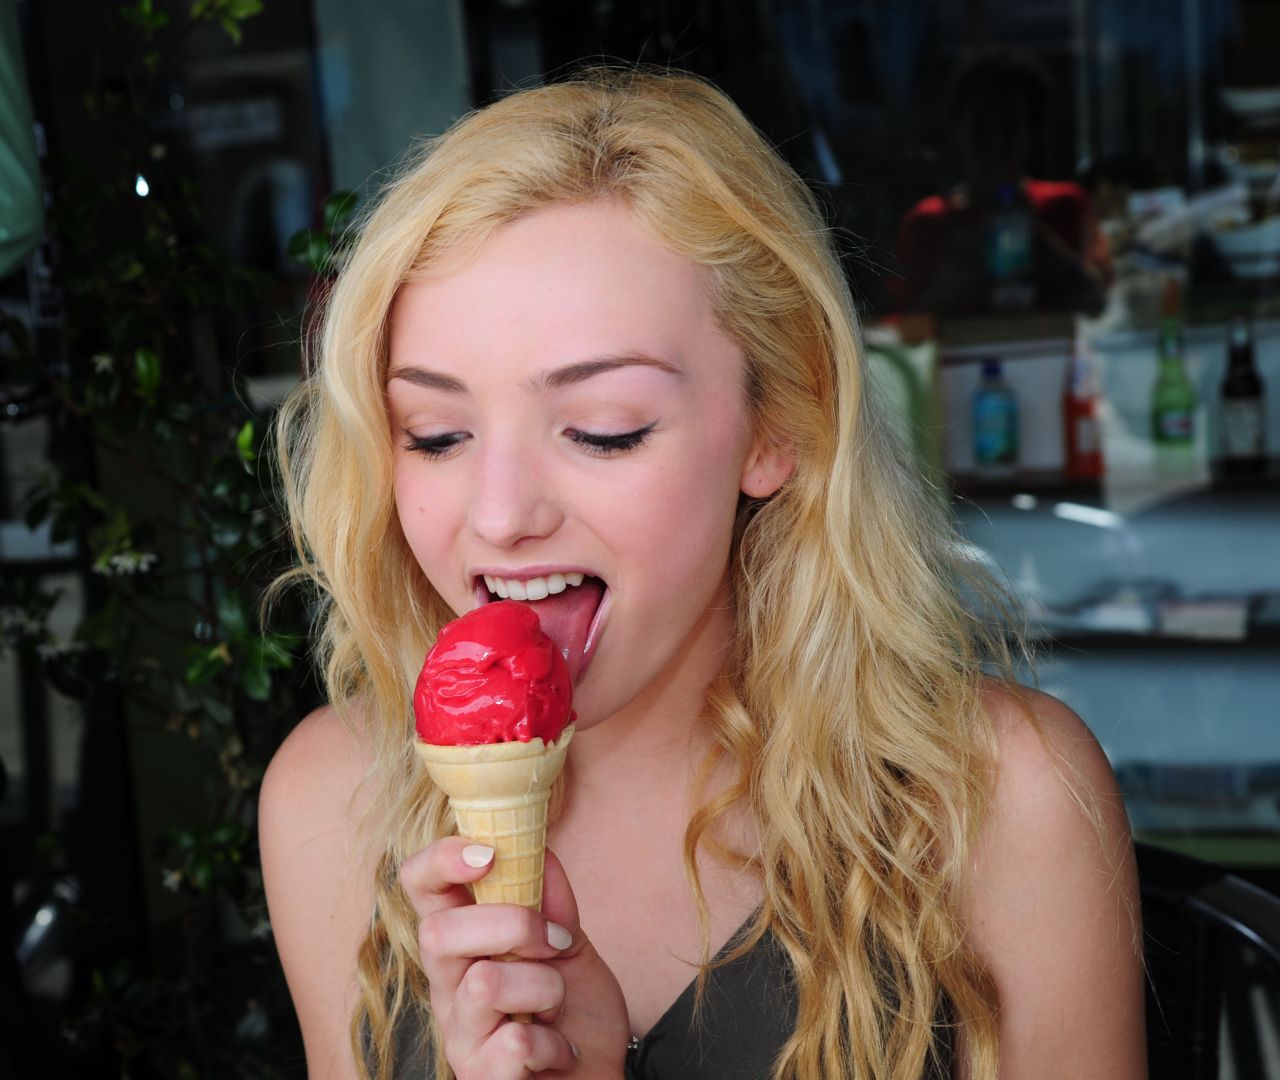 peyton-roi-list-cute-ice-cream-photoshoot-september-2014_7.jpg.